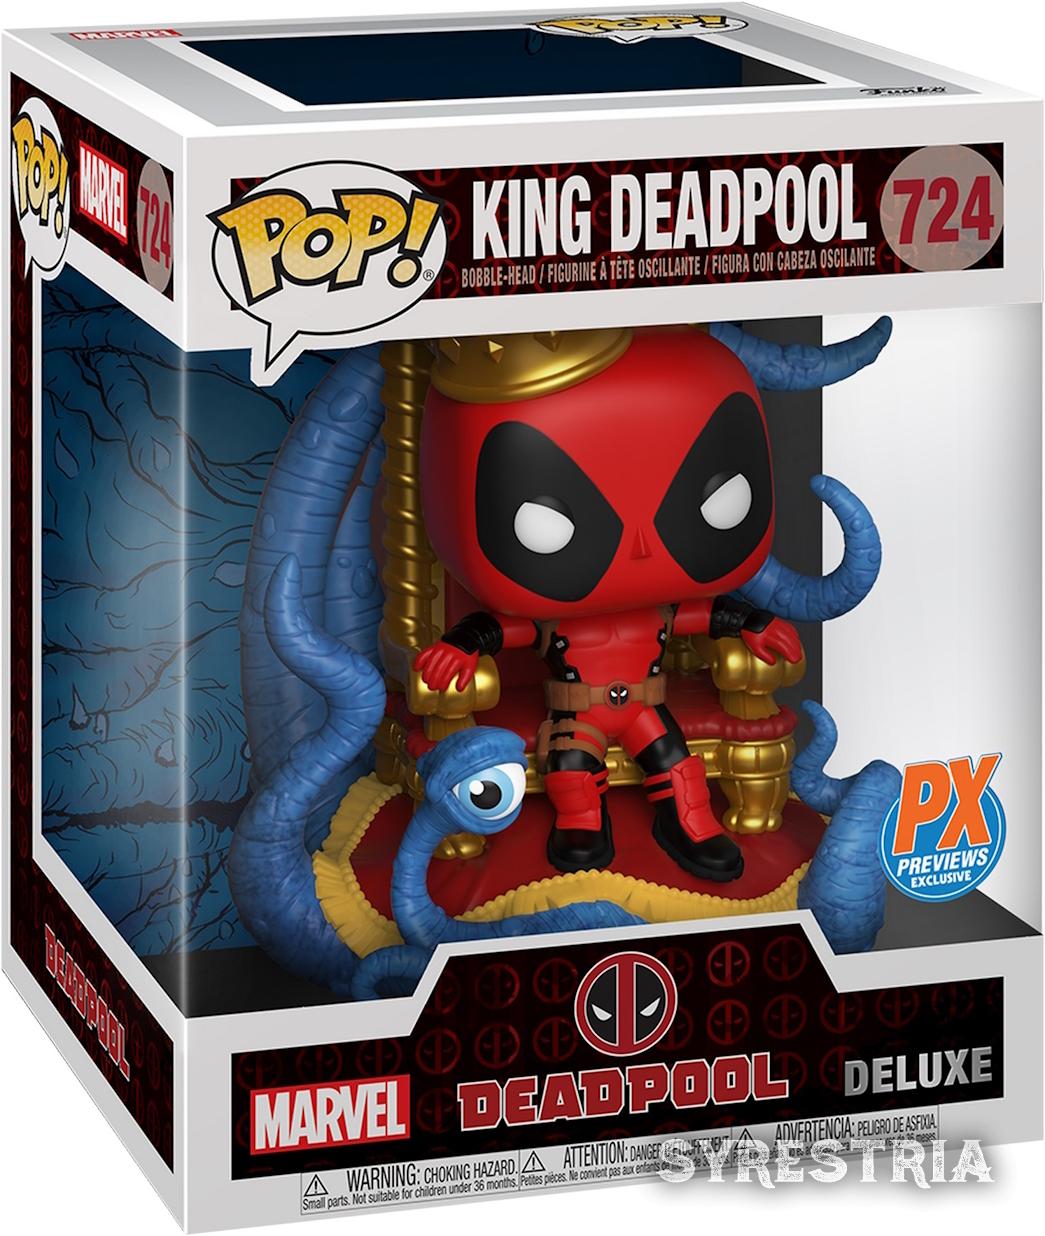 Marvel Deadpool - King Deadpool 724 PX Exclusive - Funko Pop! Deluxe